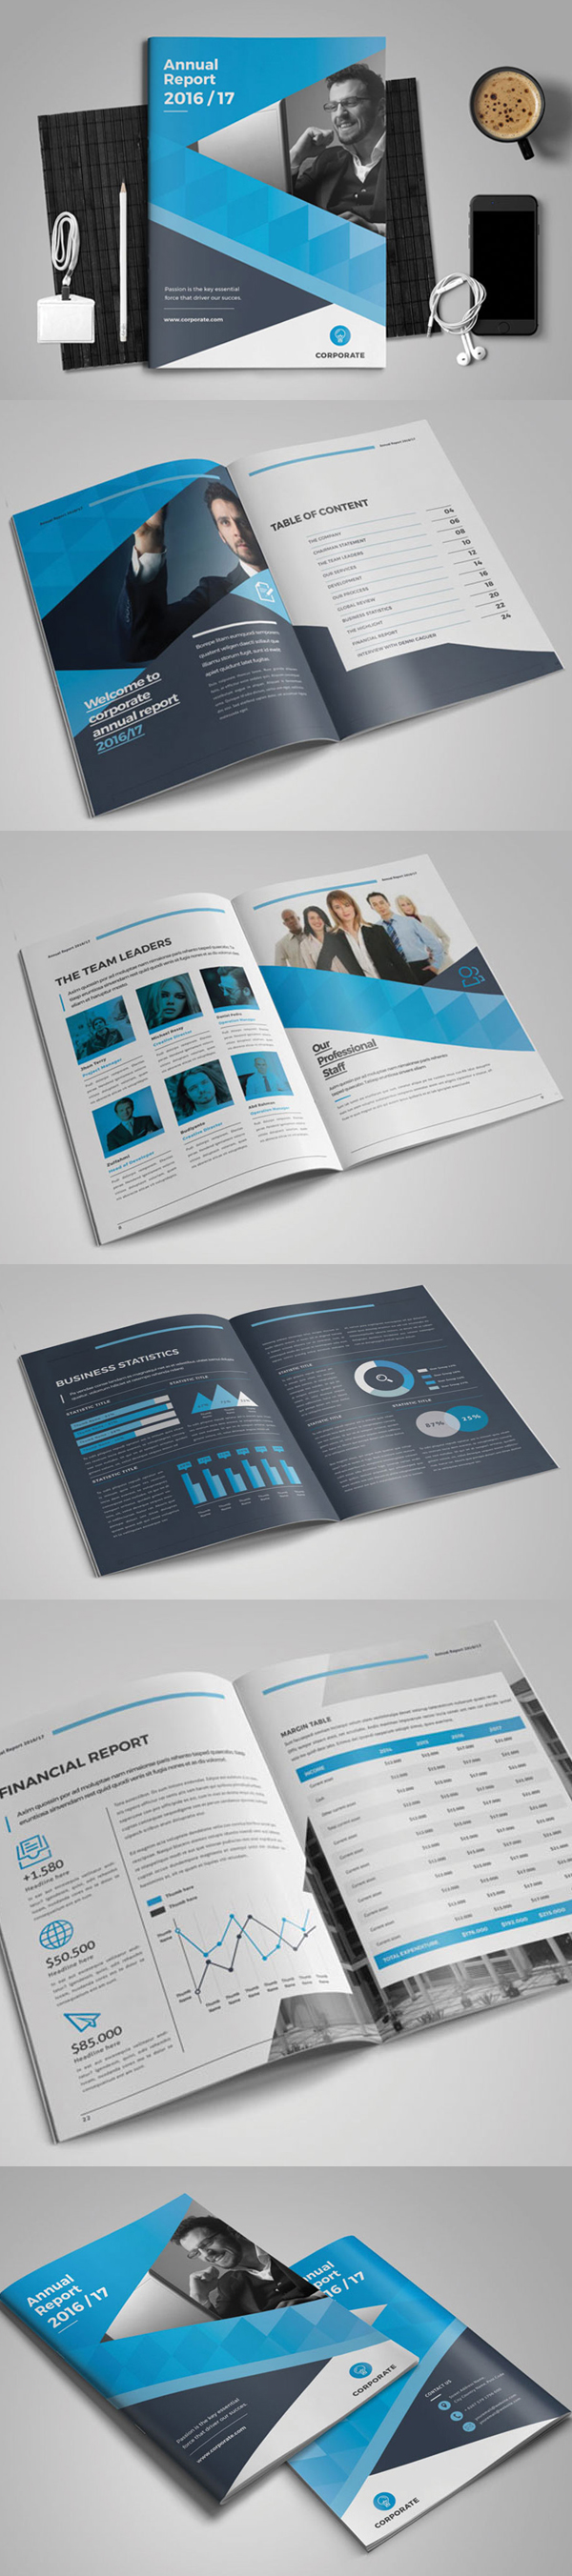 100 Professional Corporate Brochure Templates - 6